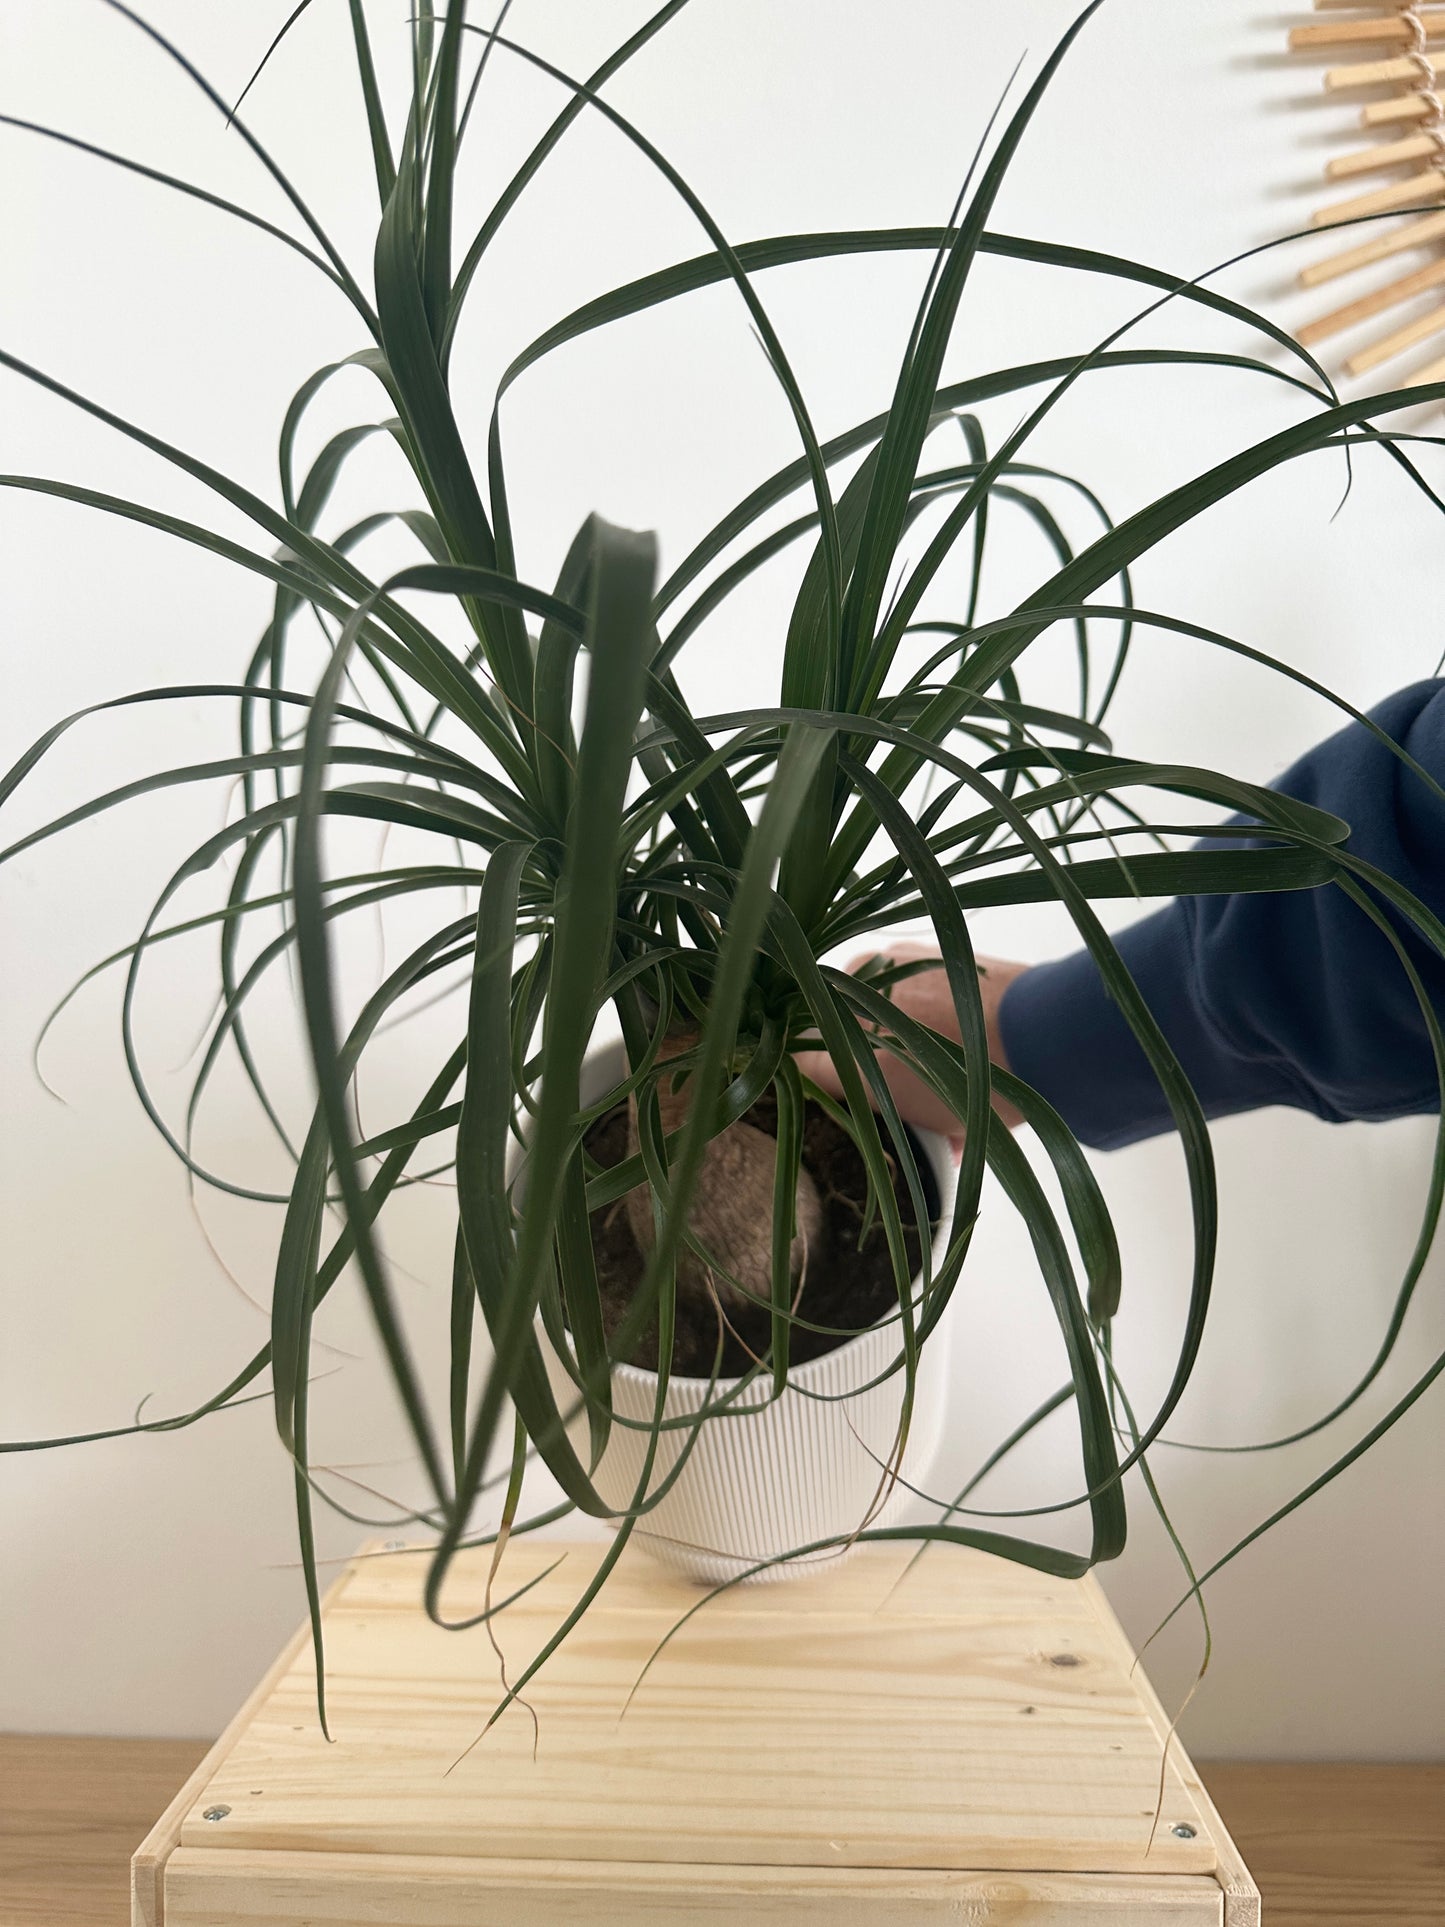 6" Hemlock Planter in White + Ponytail Palm